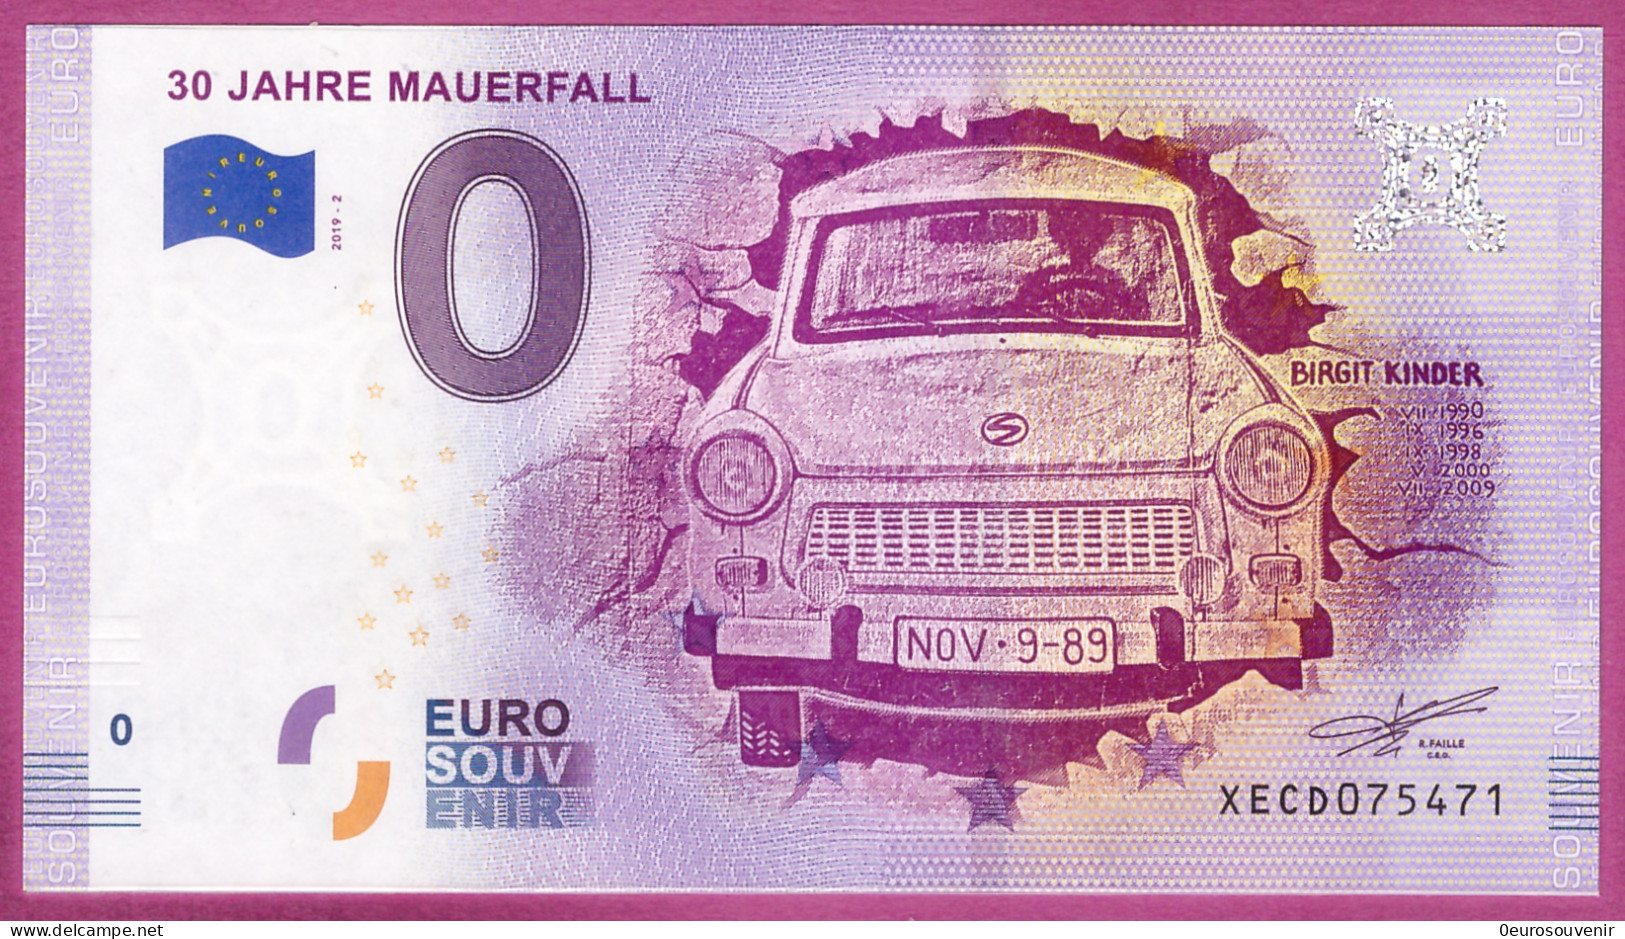 0-Euro XECD 2019-2 30 JAHRE MAUERFALL - R 3.2 IMPRESSUM 2-ZEILIG - Essais Privés / Non-officiels